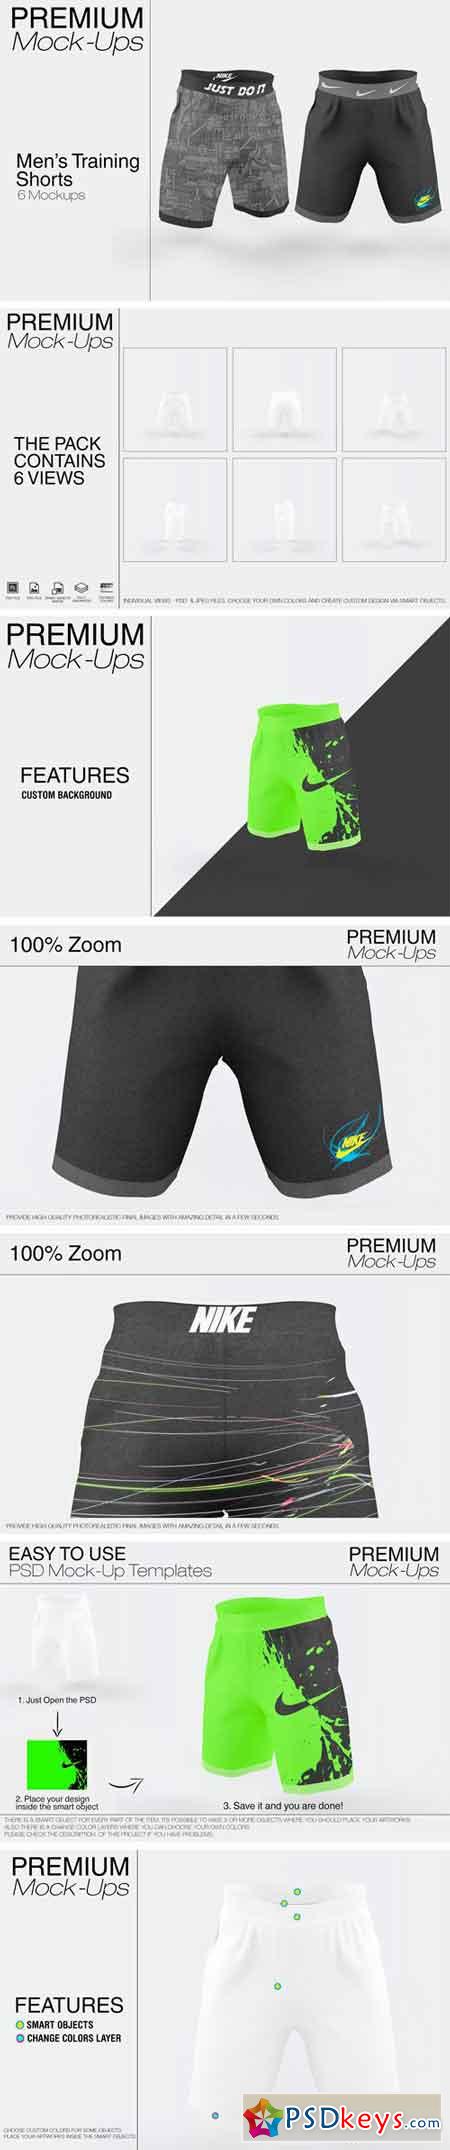 Men's Training Shorts Mockup 2381844 » Free Download Photoshop Vector Stock image Via Torrent ...